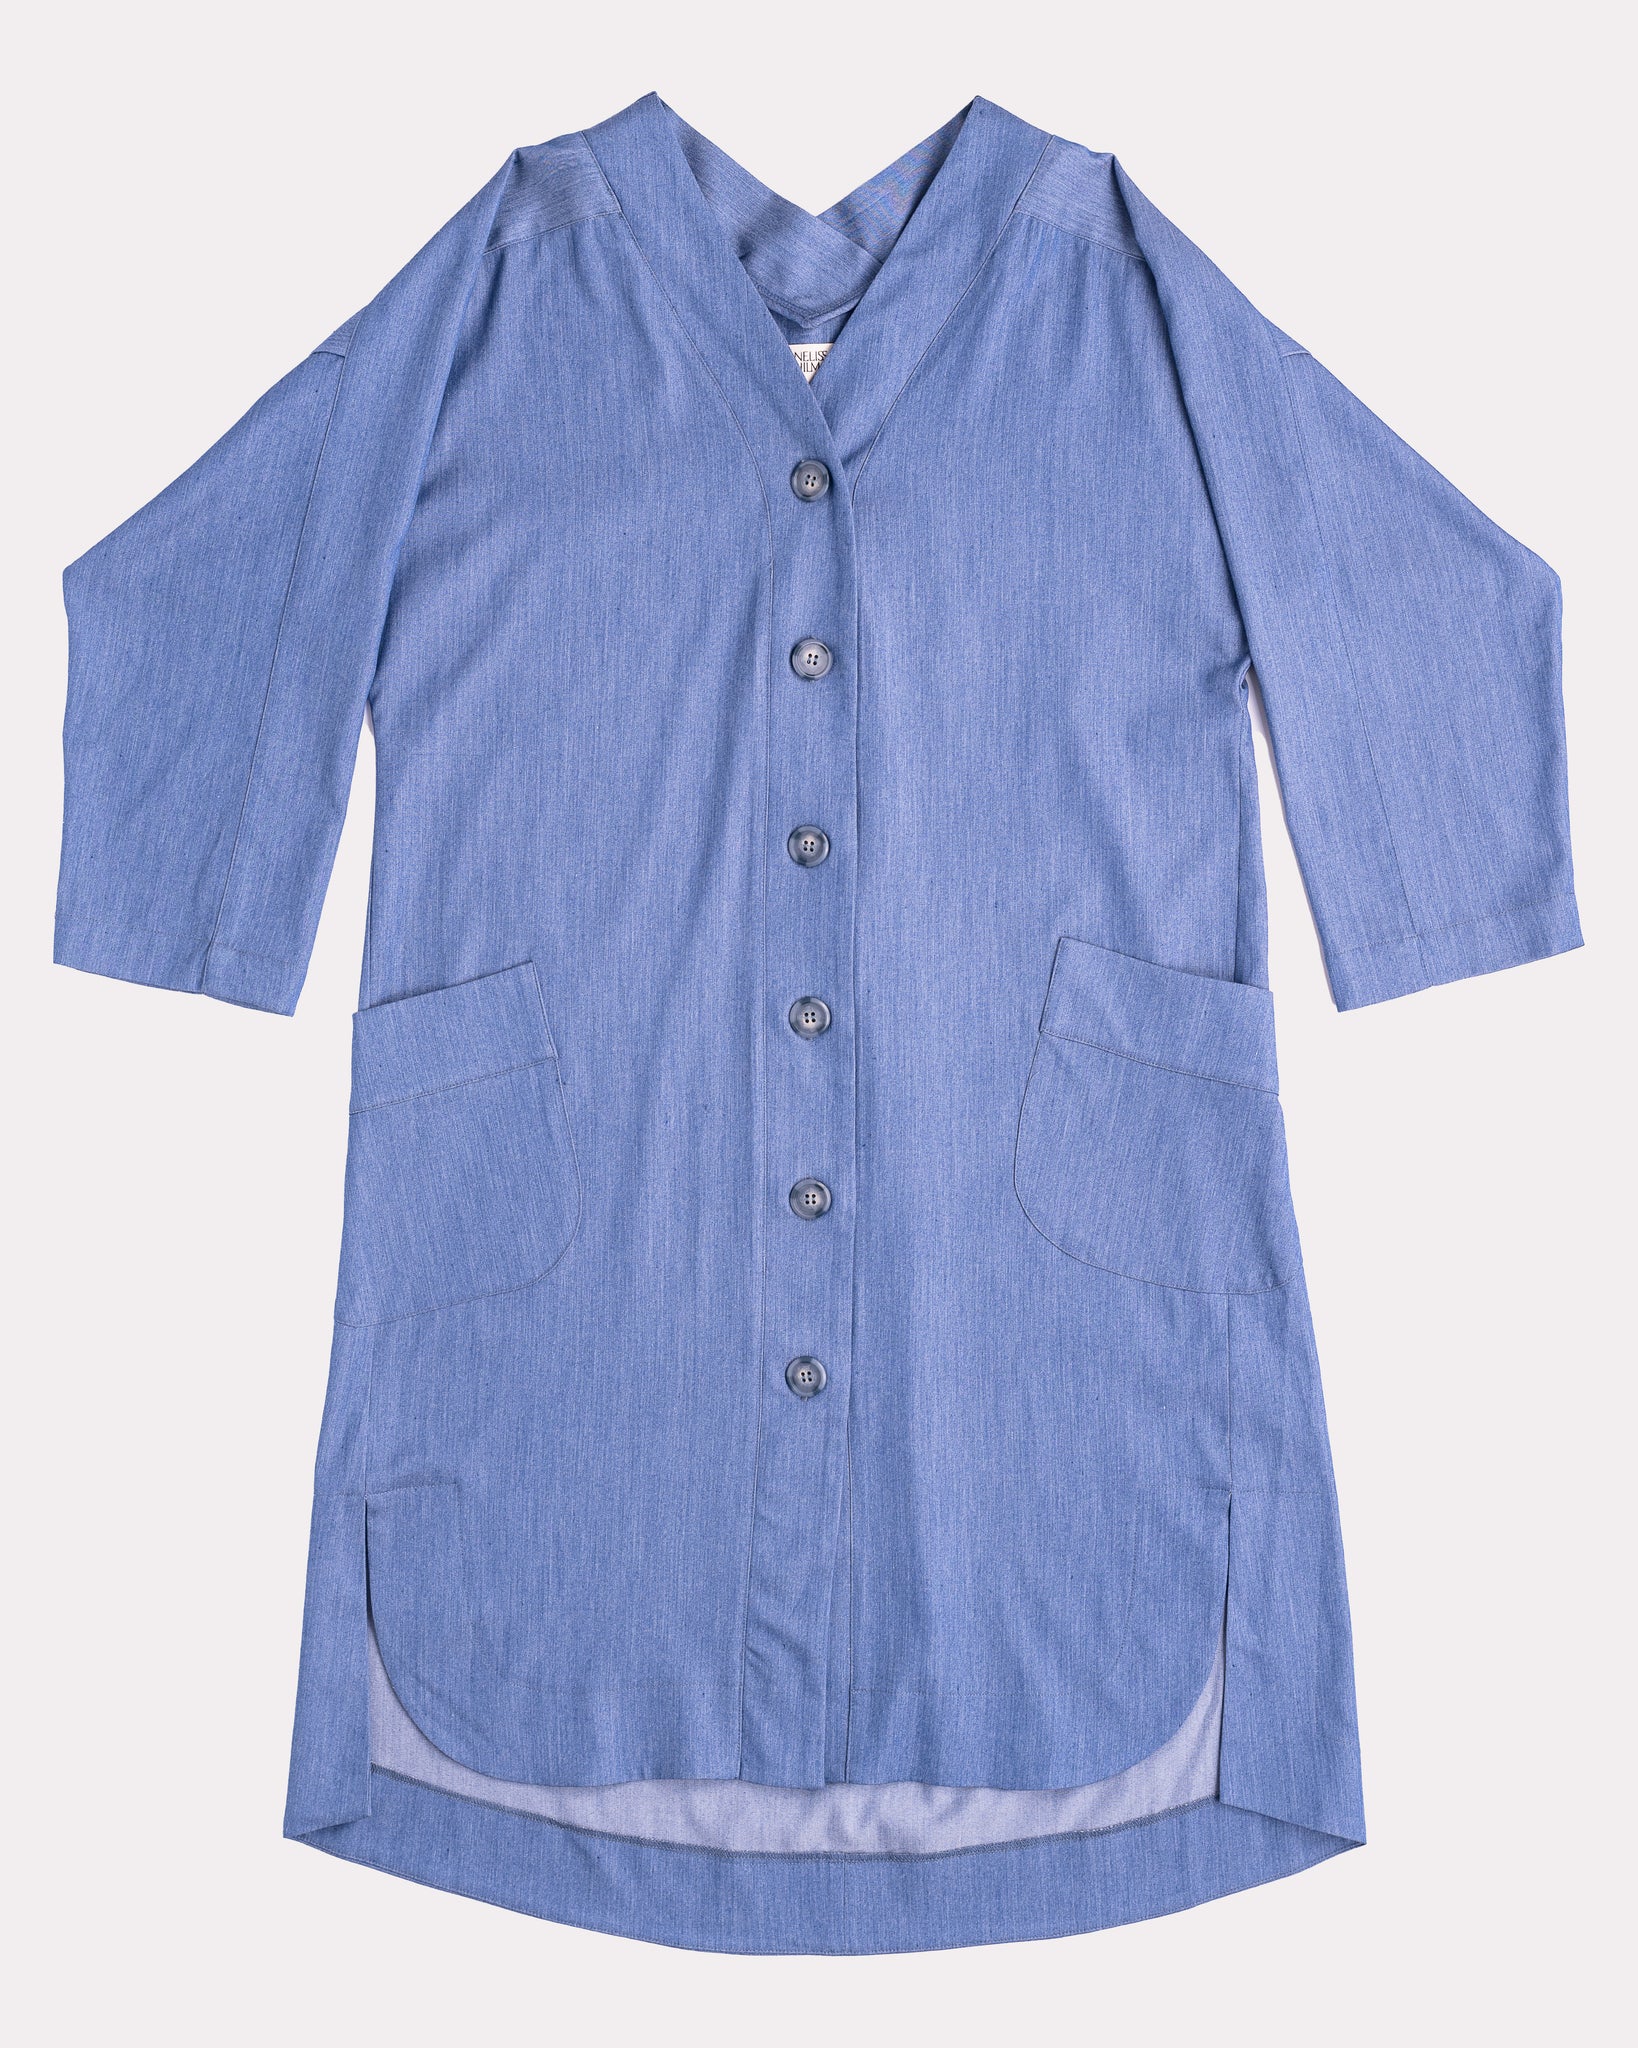 Long Sleeve Midi Dress (Blue Denim)